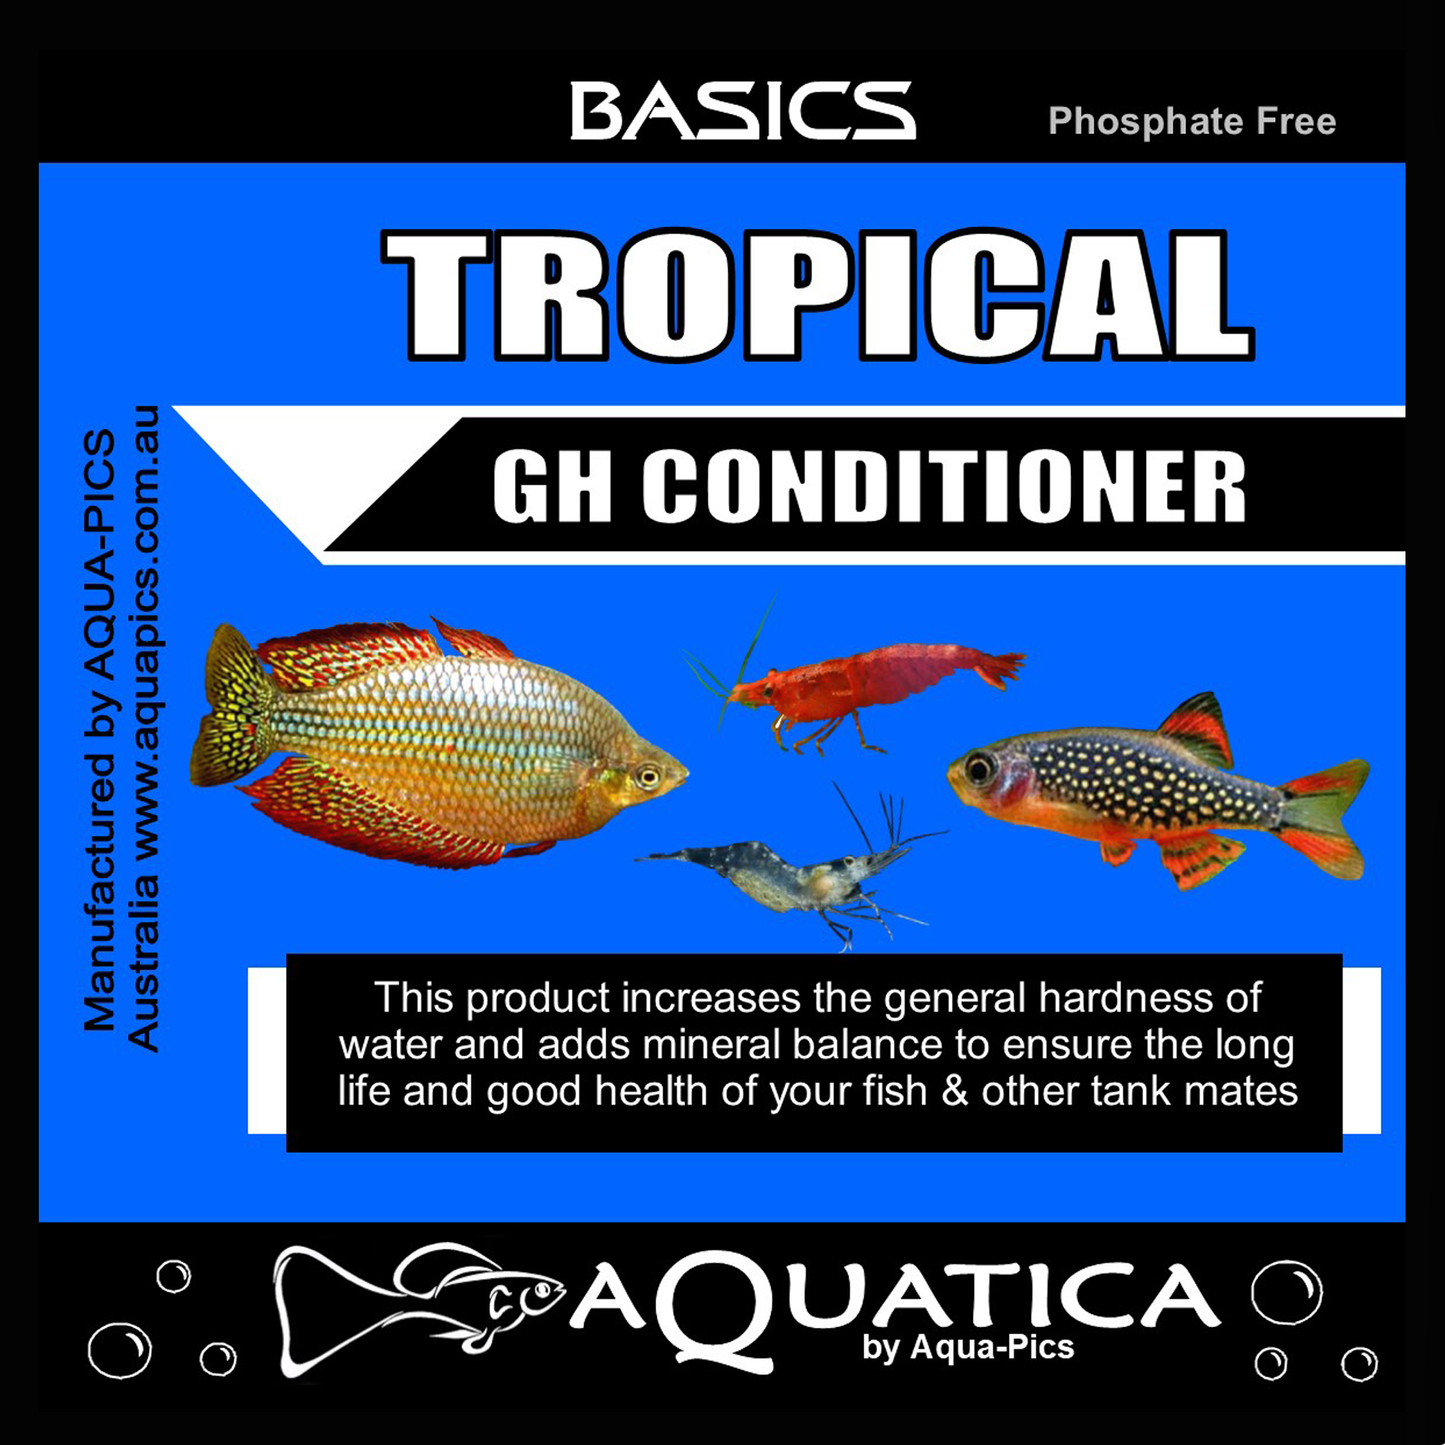 Aquatica Basics Tropical GH Conditioner 4.5kg bag